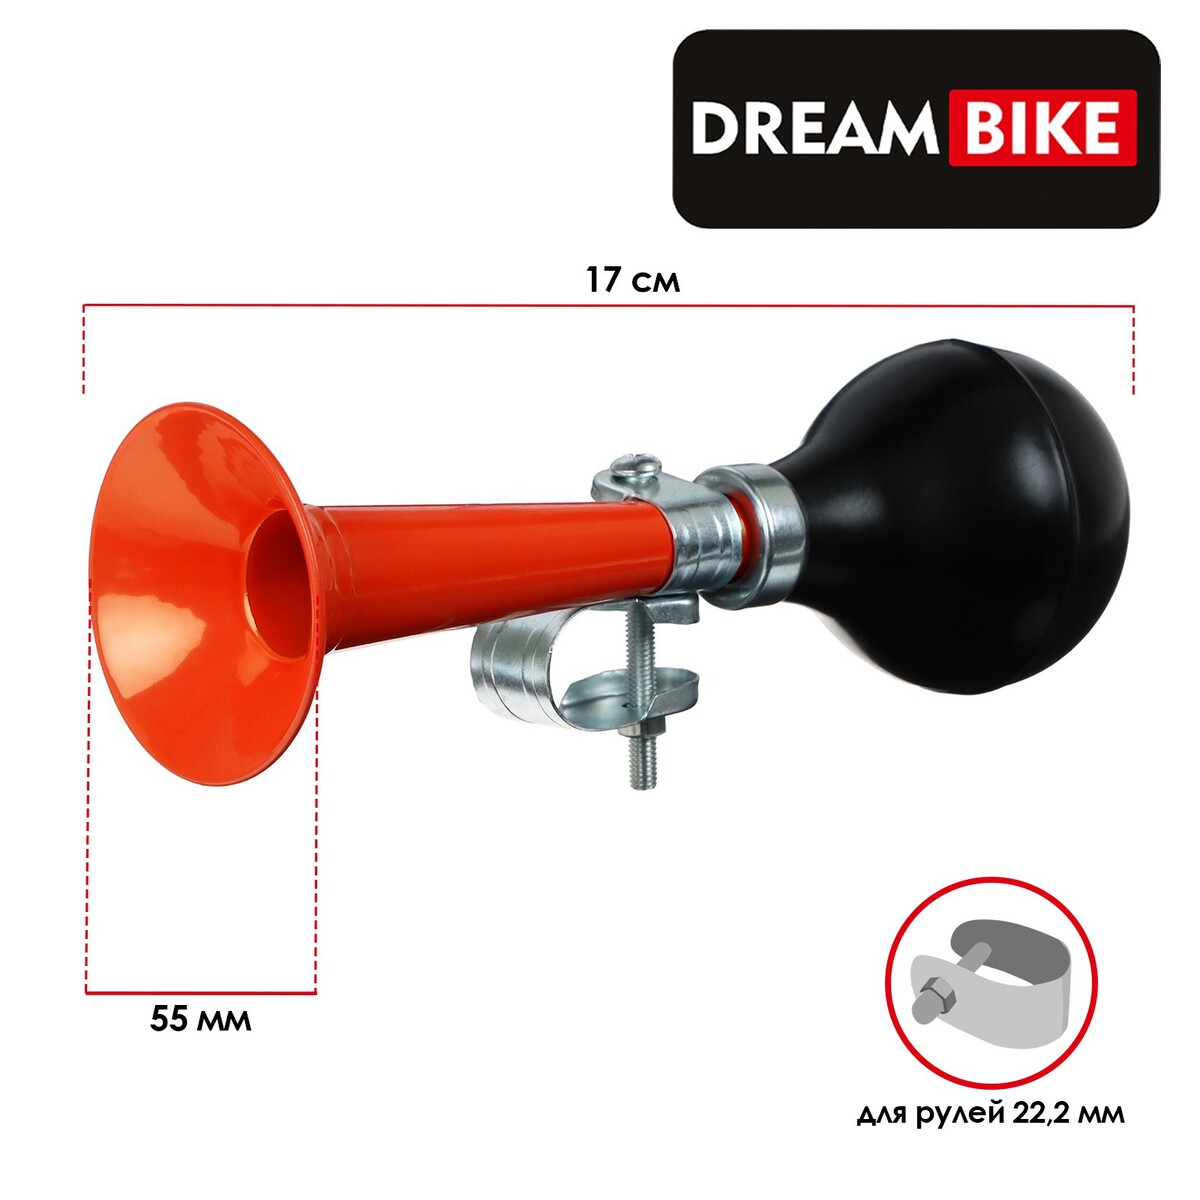 Клаксон dream bike, цвет оранжевый, Dream Bike